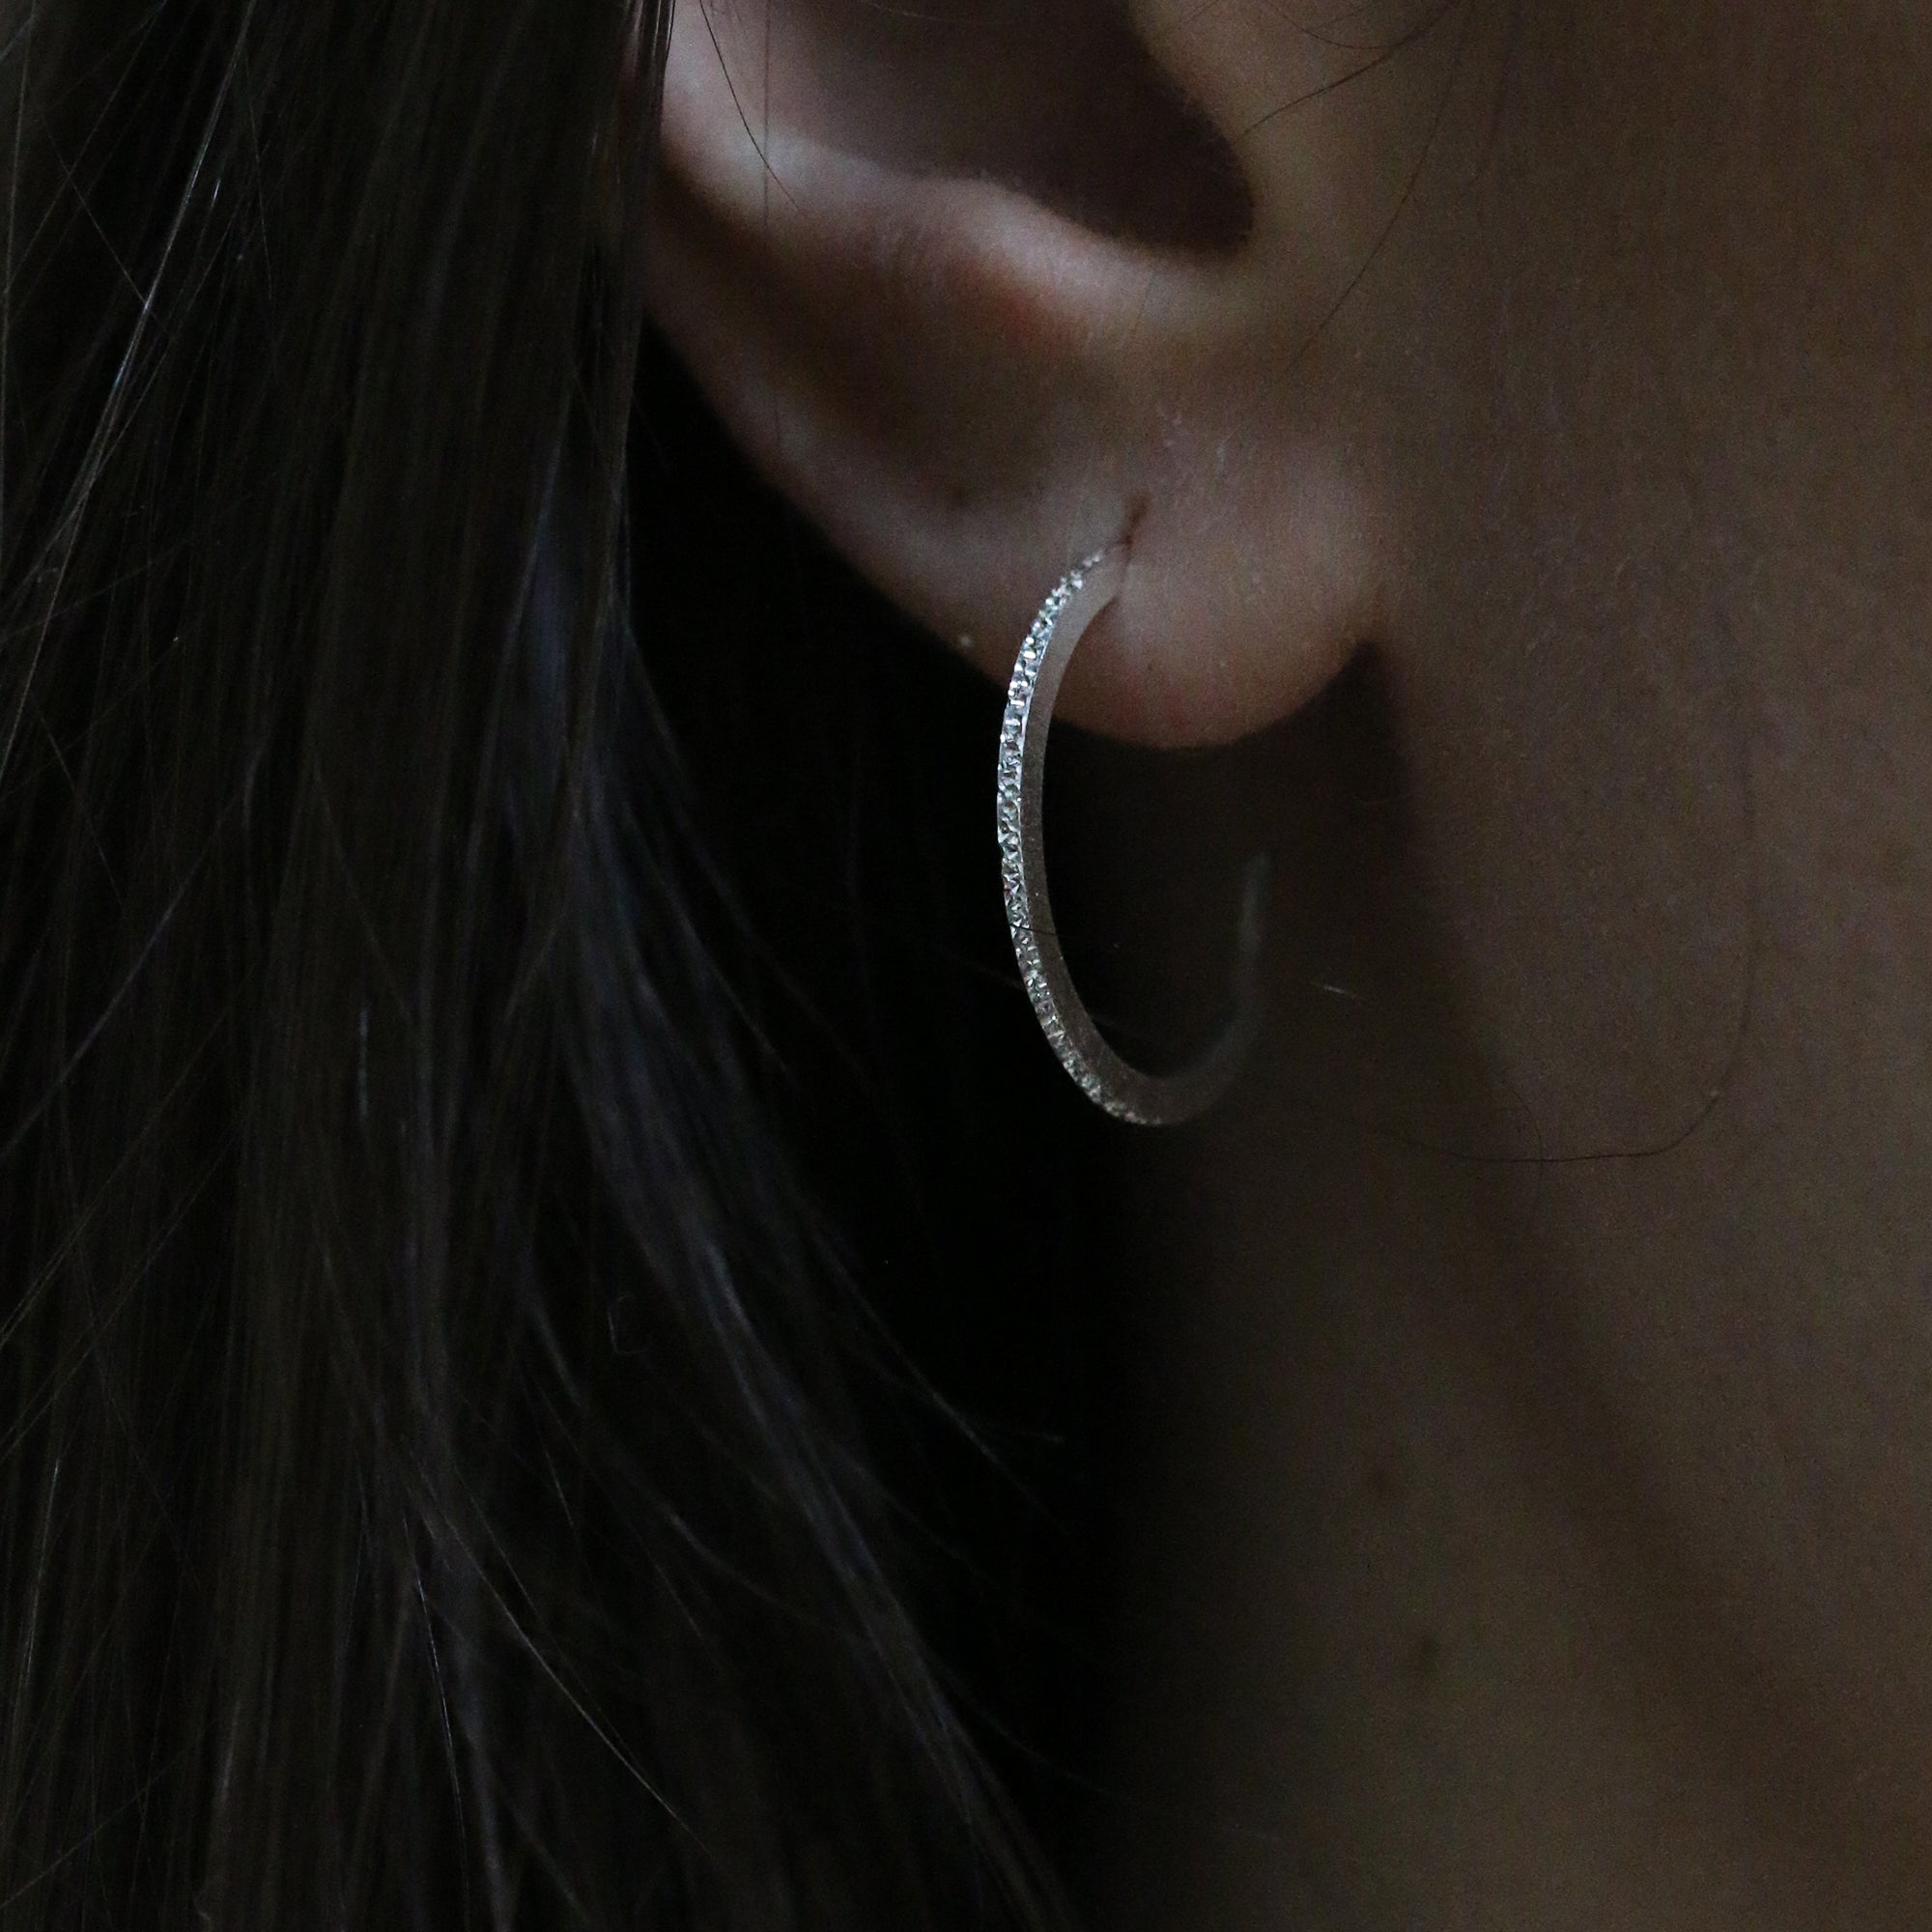 Christina Kober Sparkle Hoop Earrings at Von Maur